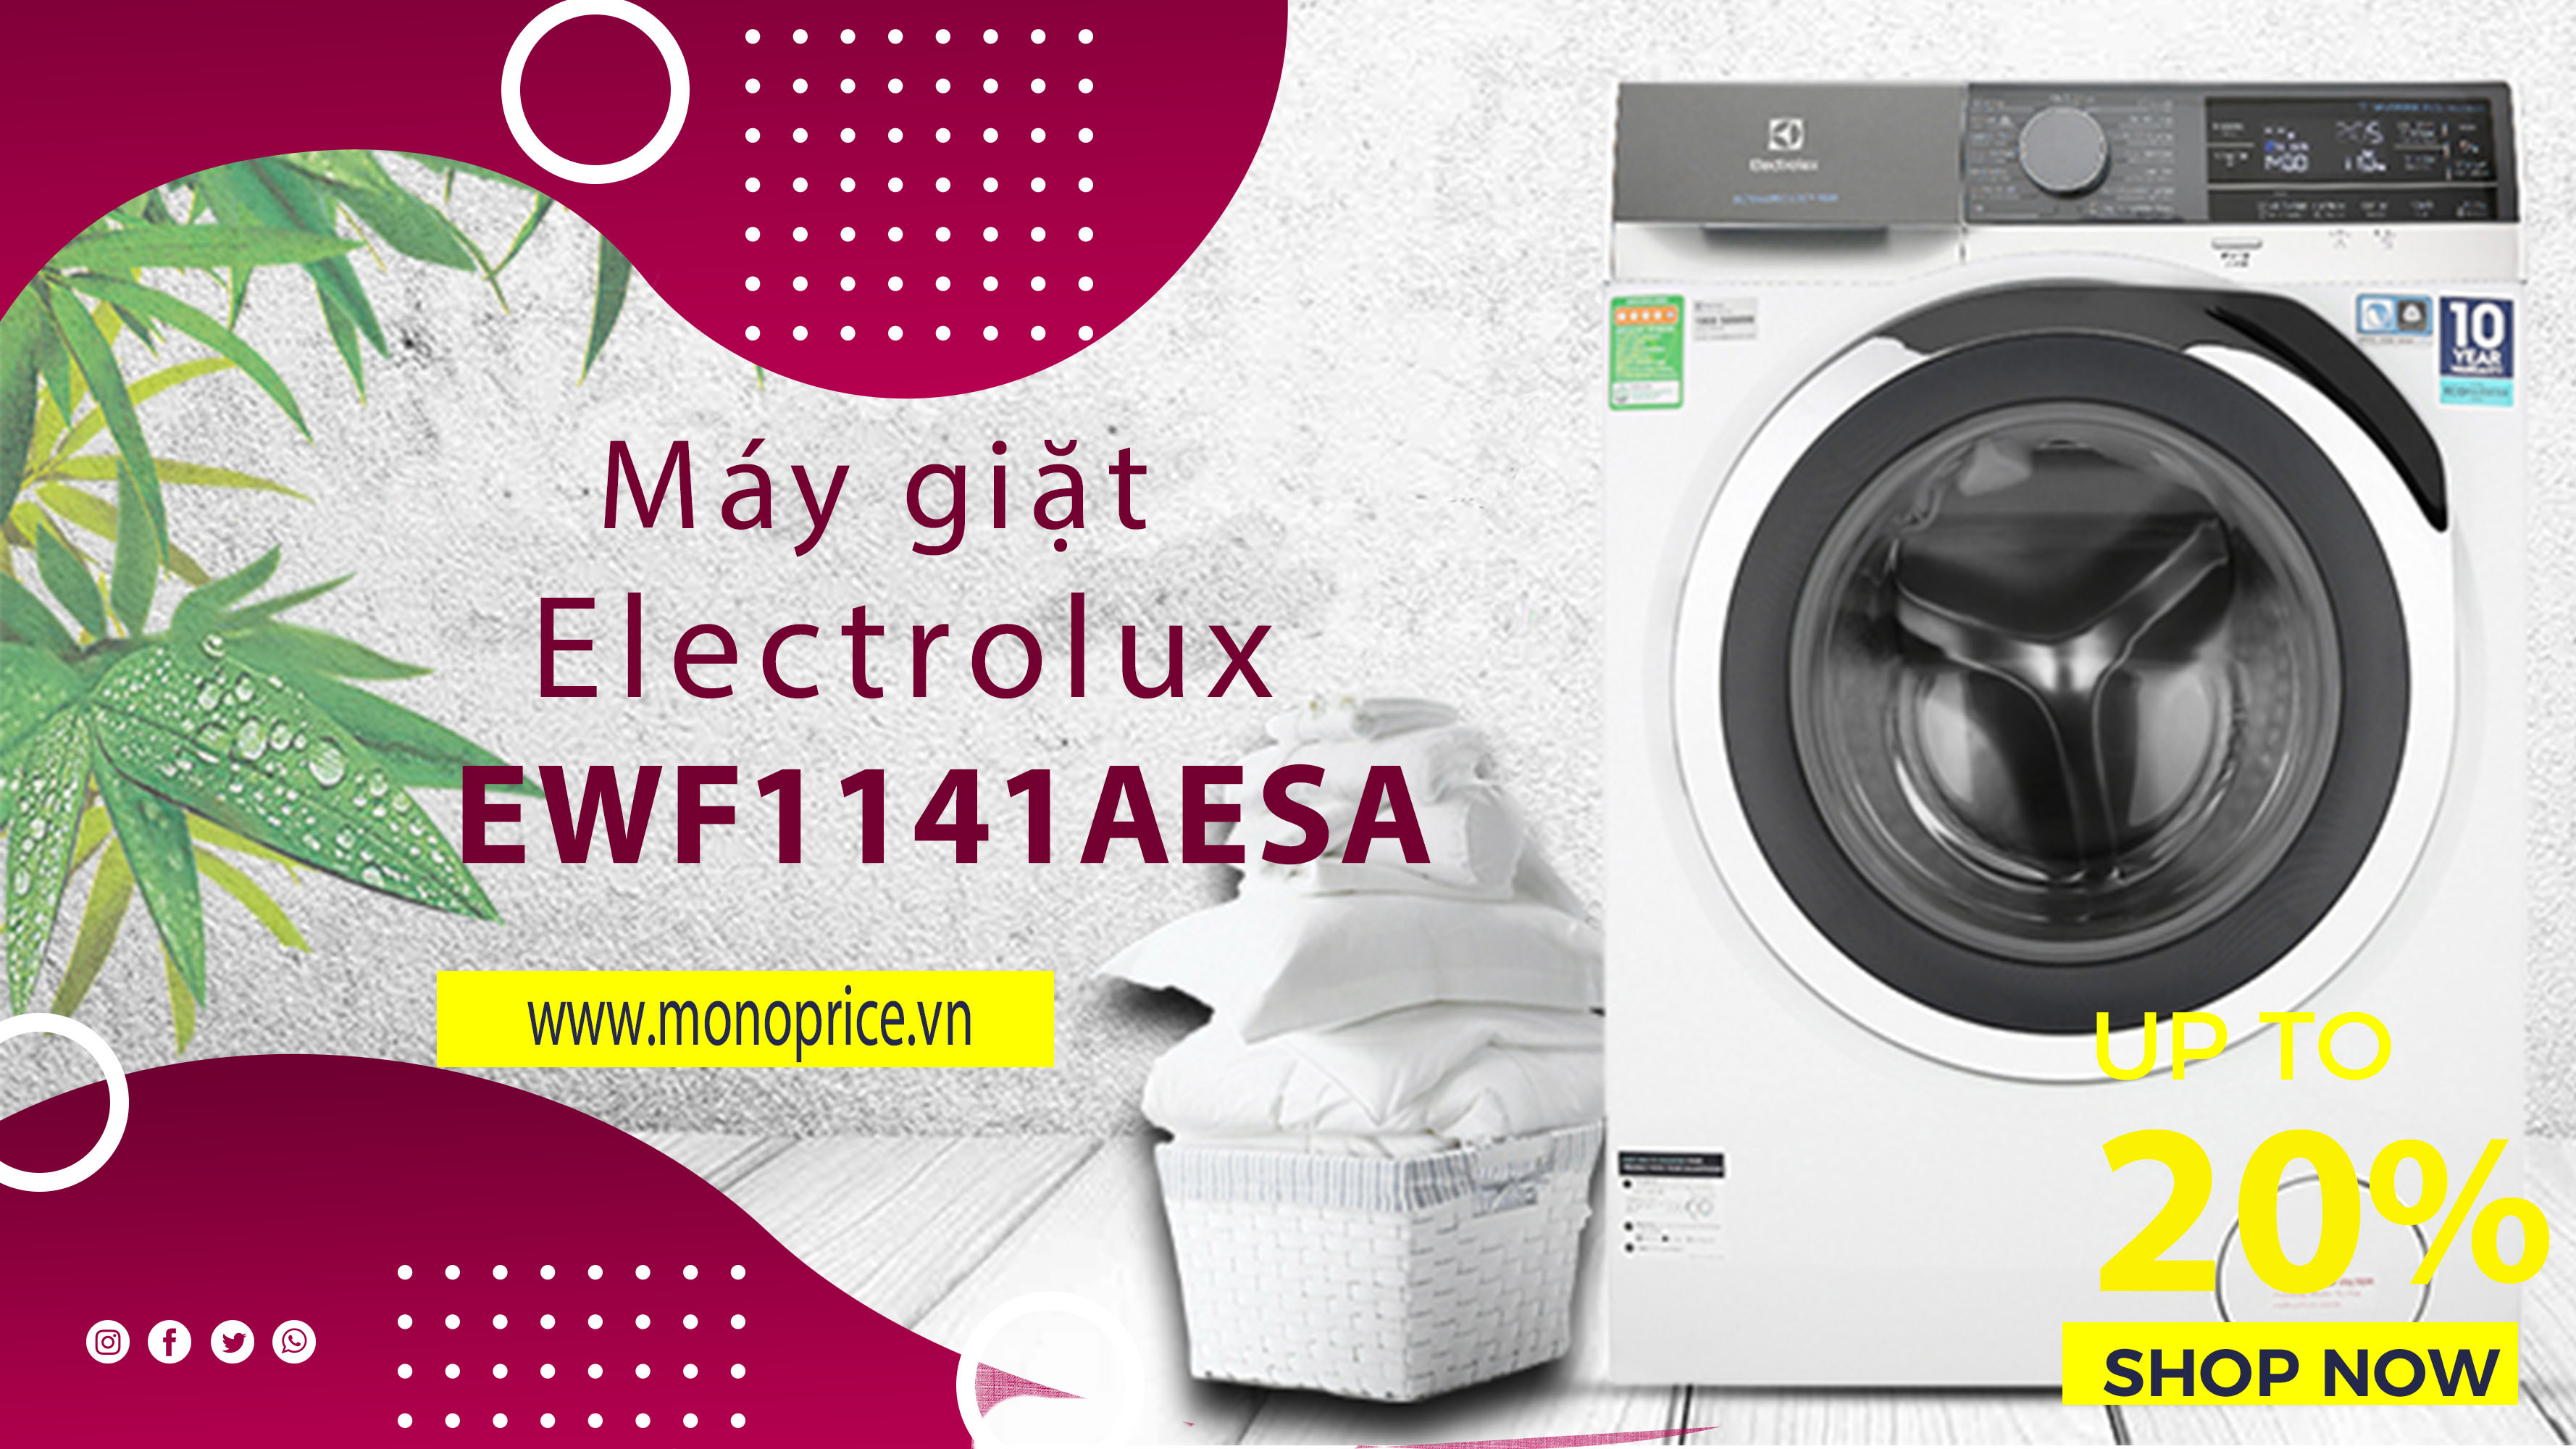 HCM]Tay nắm cửa máy giặt Electrolux | Lazada.vn